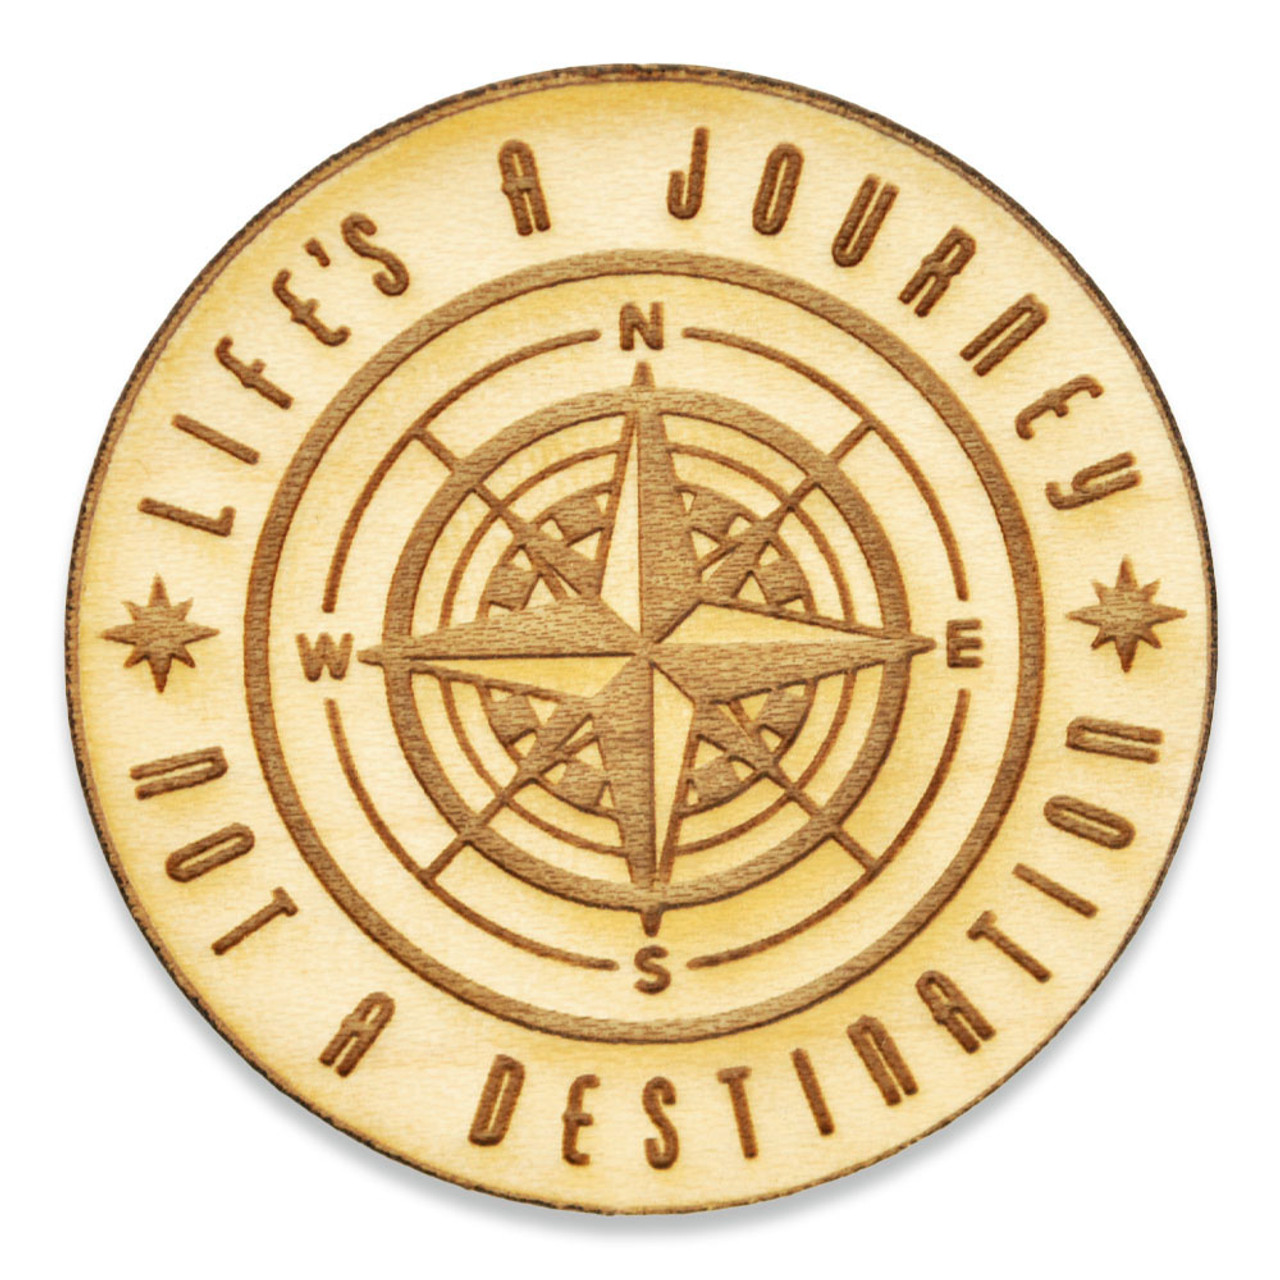 journey of life symbol